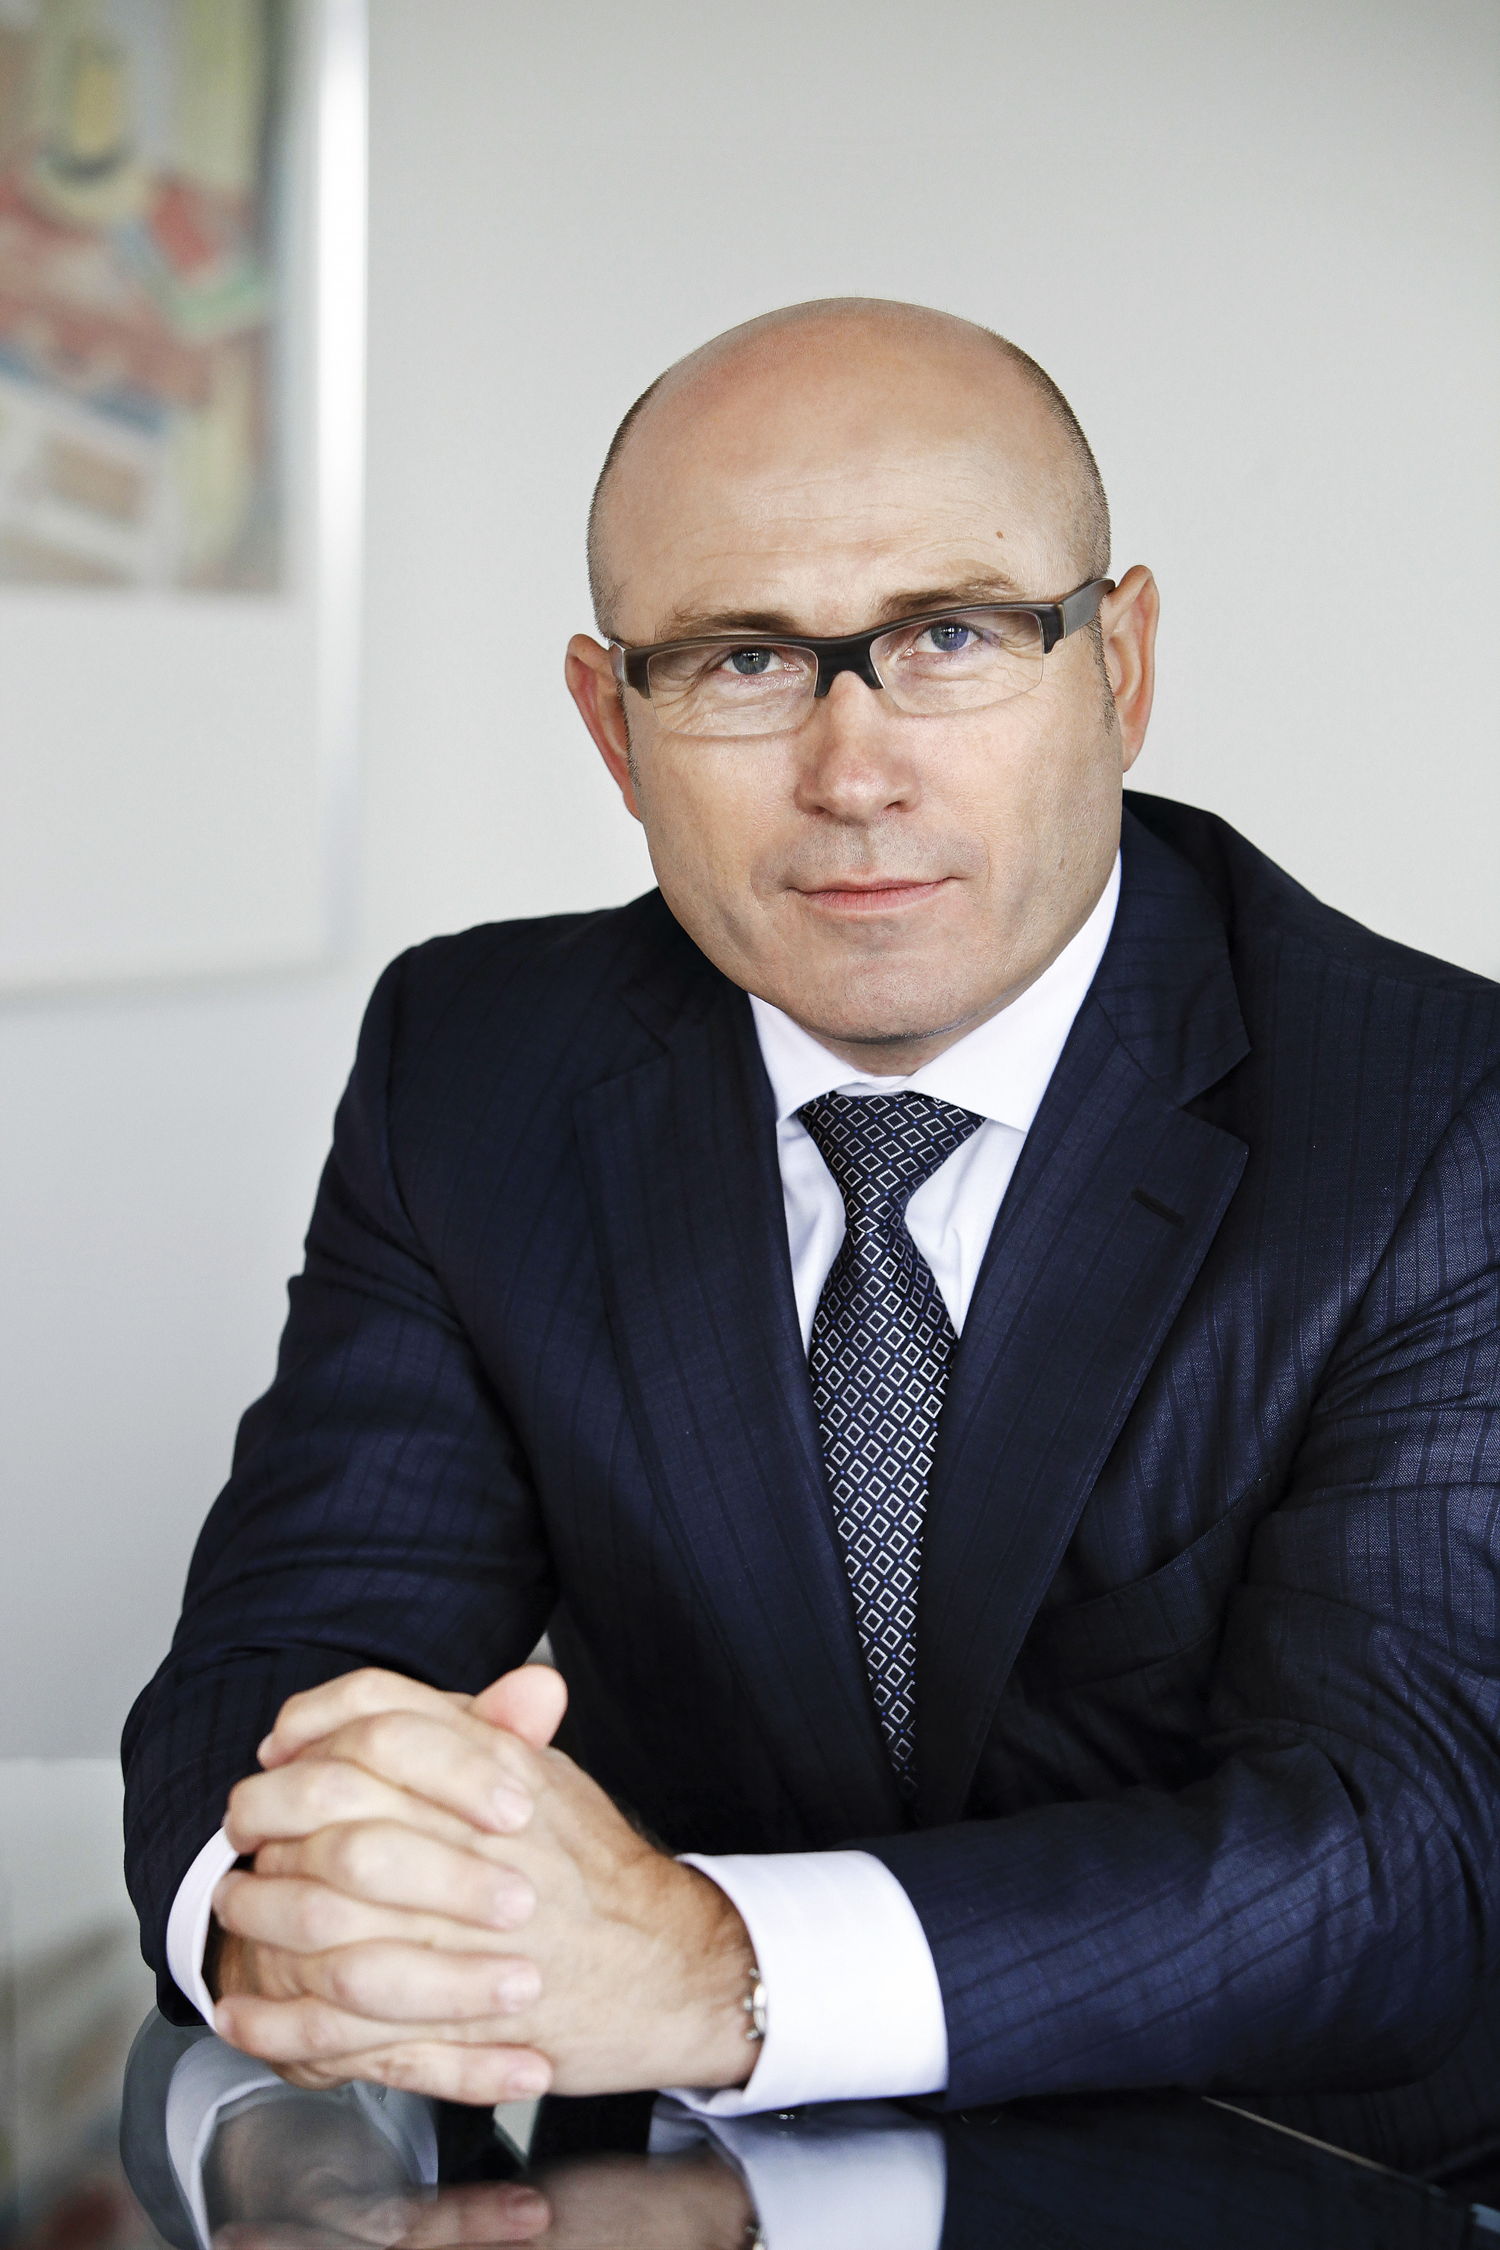 Bernhard Maier (55), former Porsche Sales and Marketing Director, took over as CEO of the ŠKODA brand on 1 November 2015.